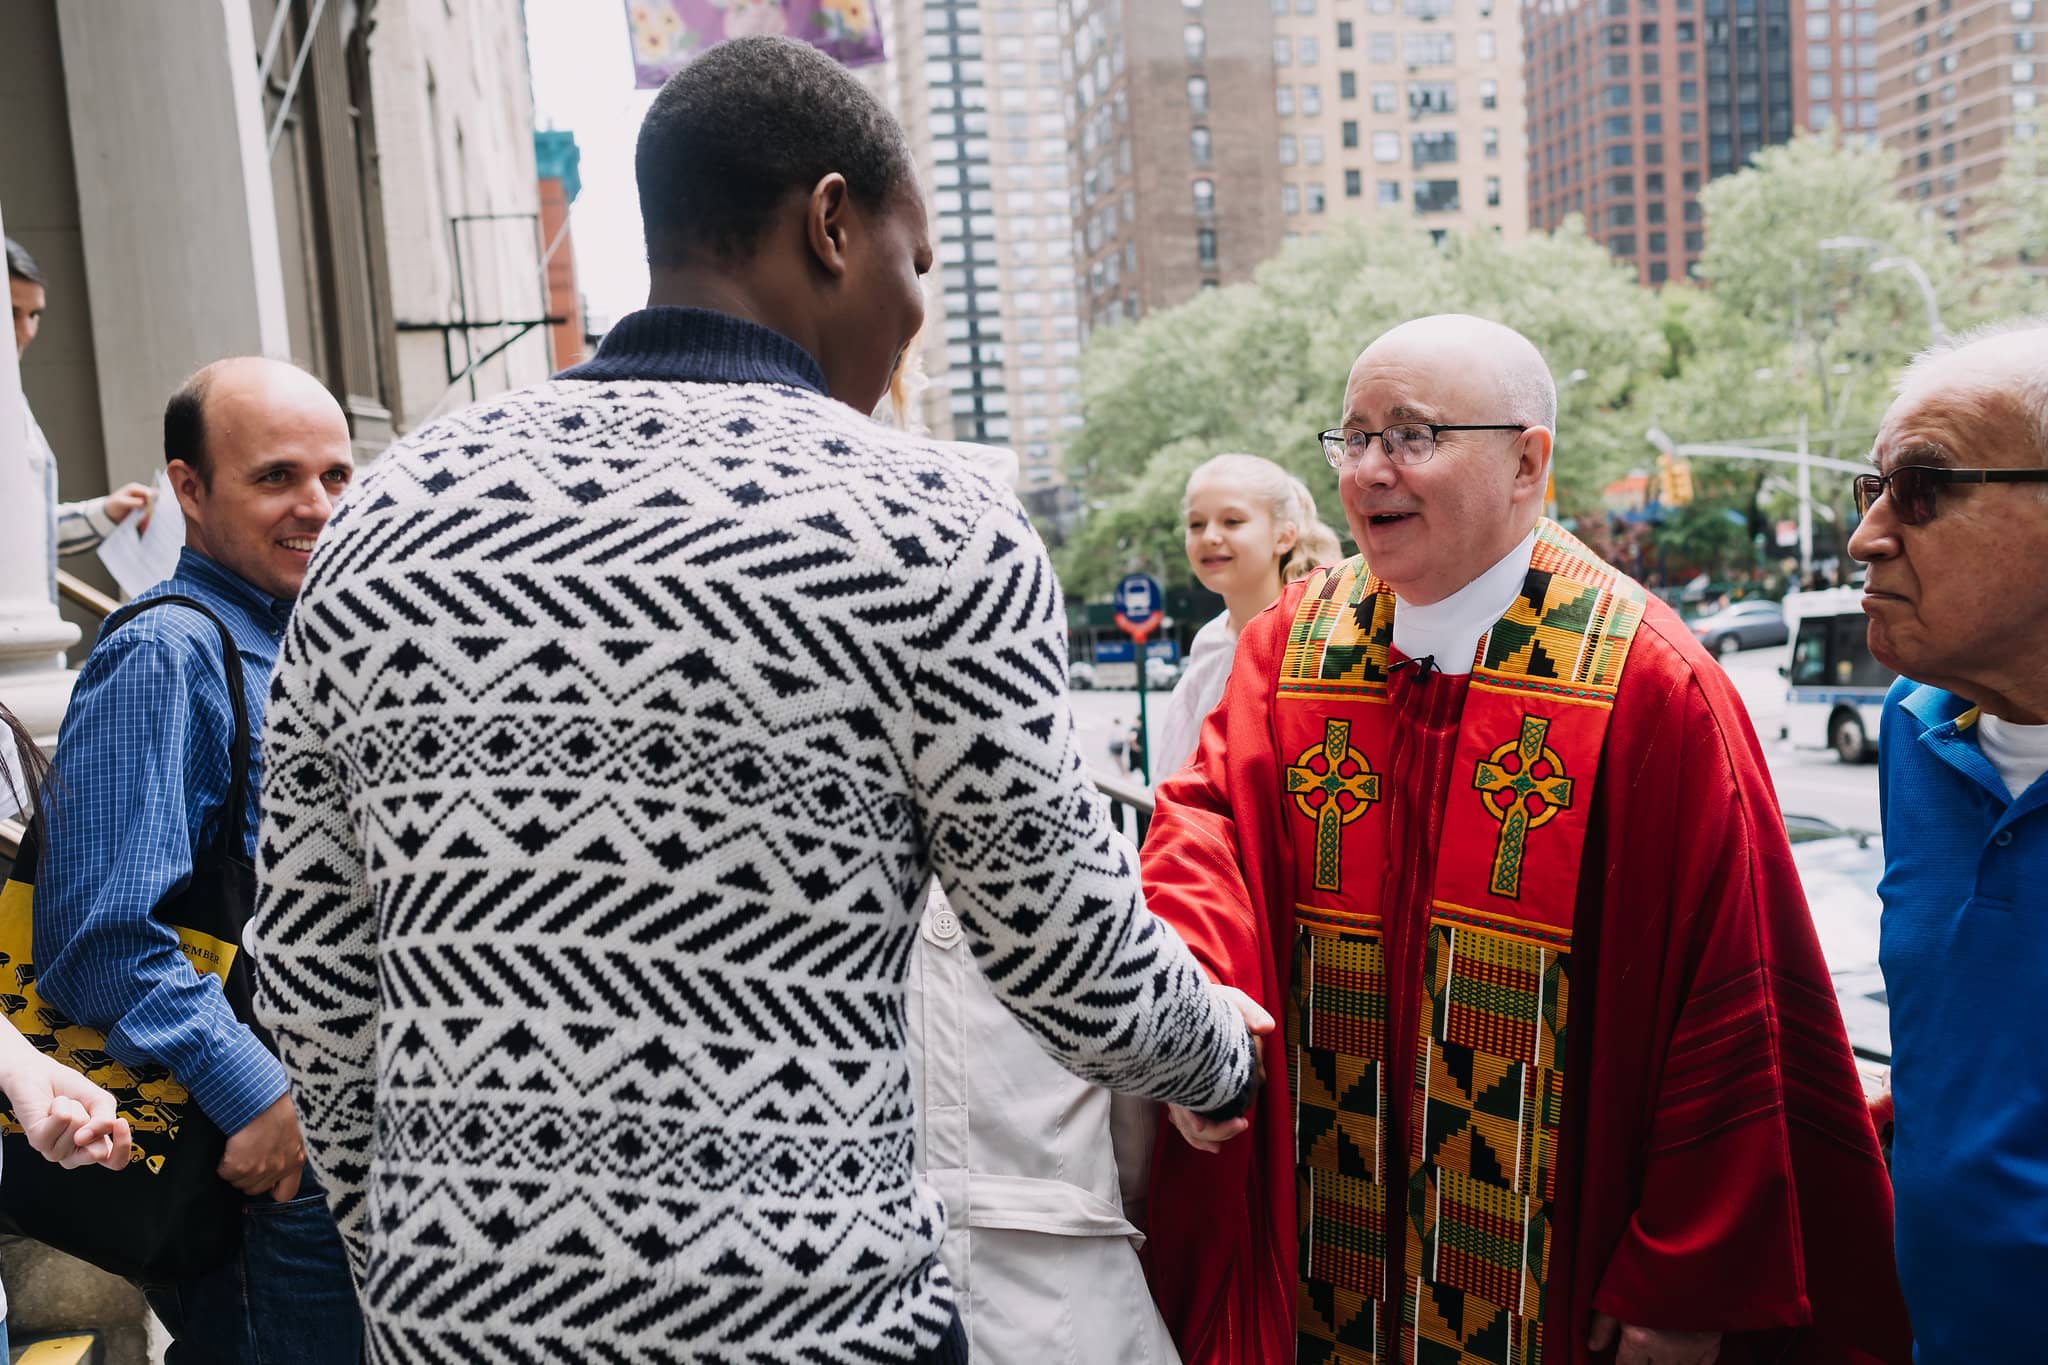 handshake-diversity-welcome-everyone-mass-st-francis-de-sales-church-new-york-city.jpg